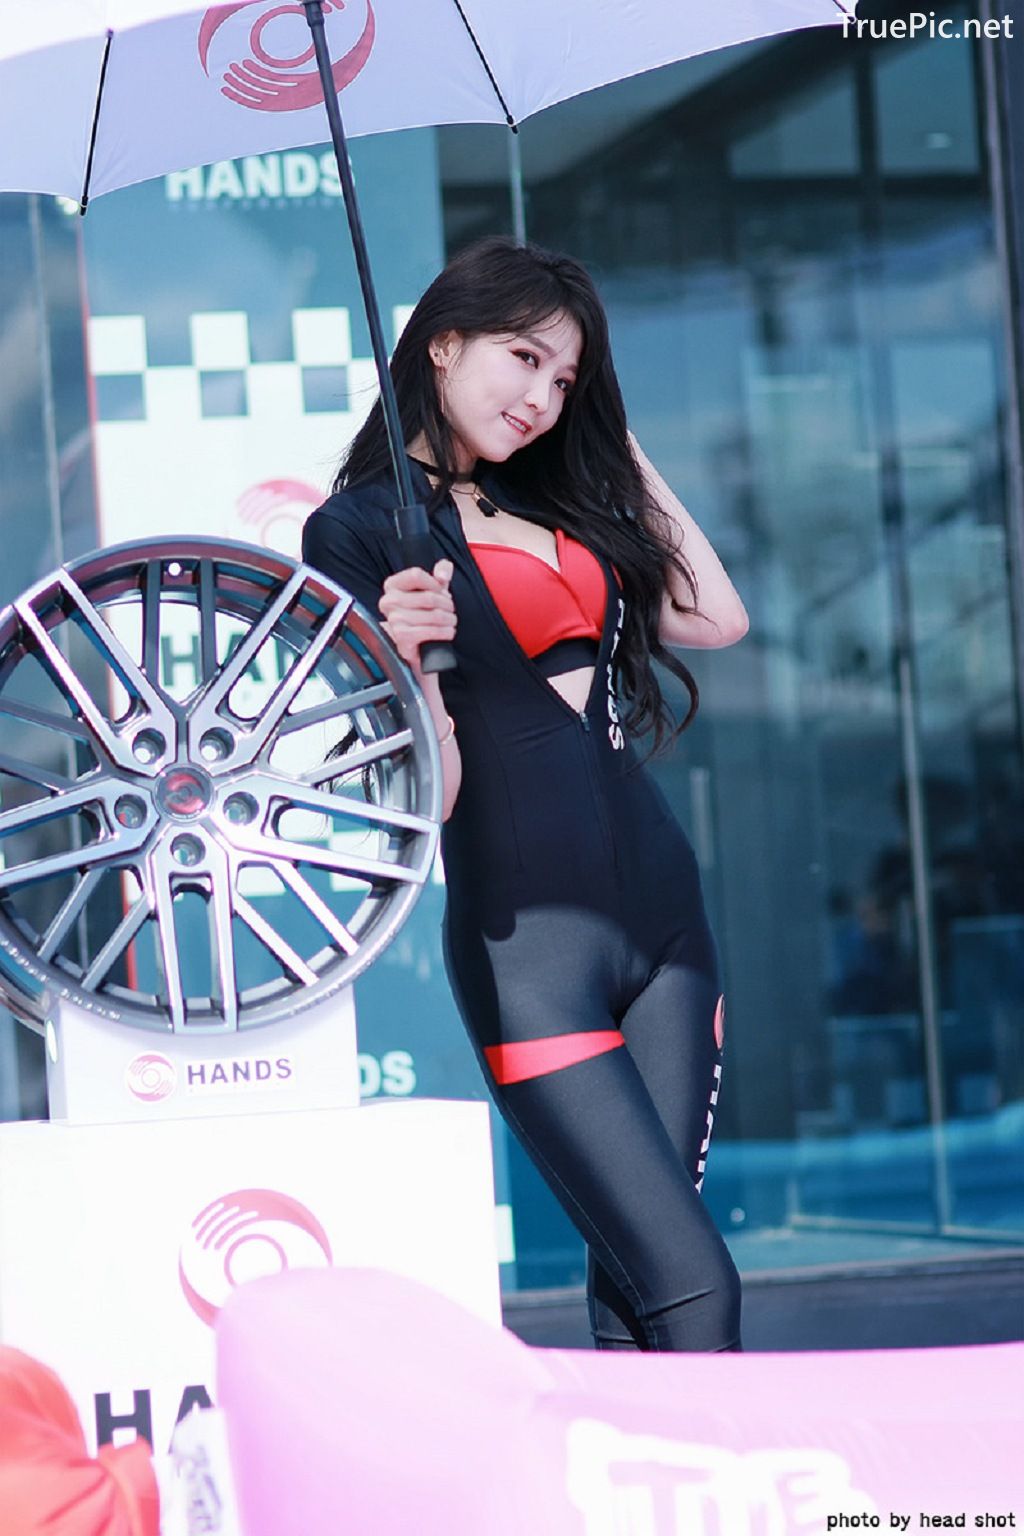 Image-Korean-Racing-Model-Lee-Eun-Hye-At-Incheon-Korea-Tuning-Festival-TruePic.net- Picture-106